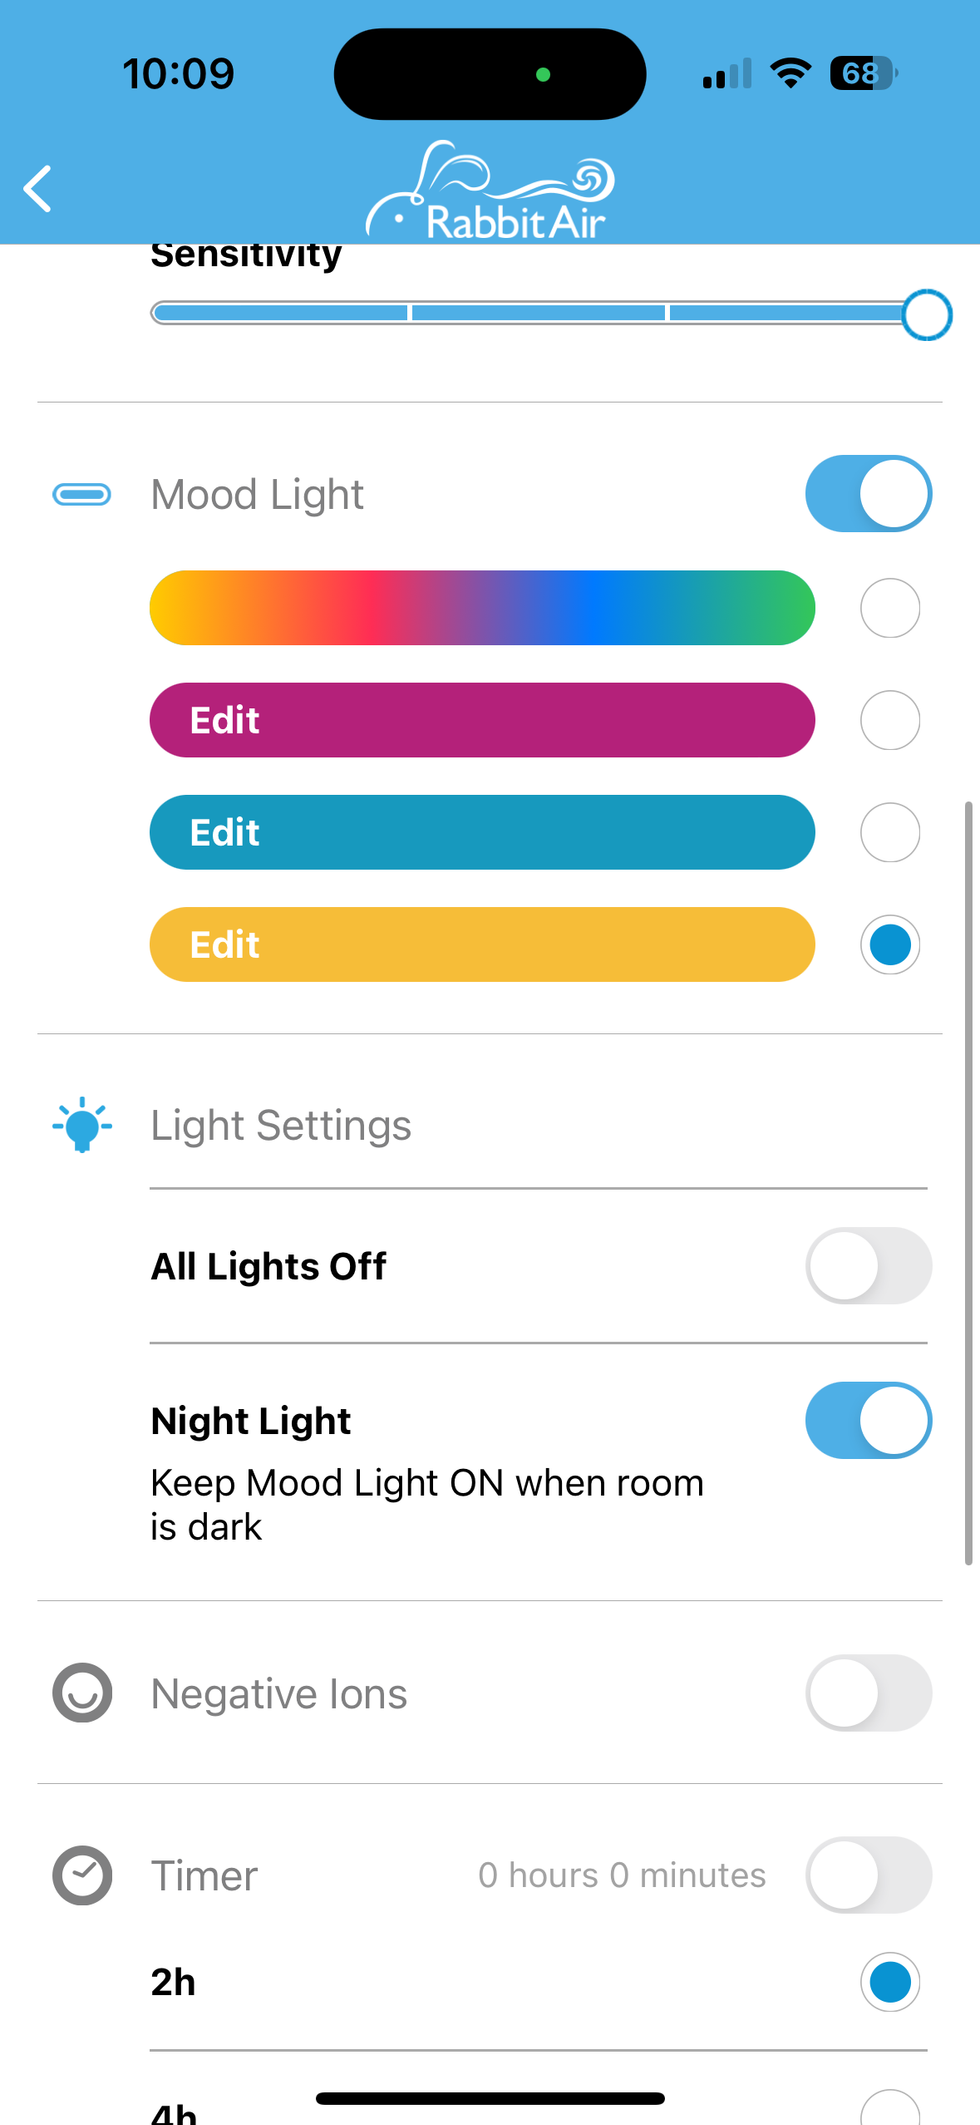 a screenshot of mood lighting controls in Rabbit Air app